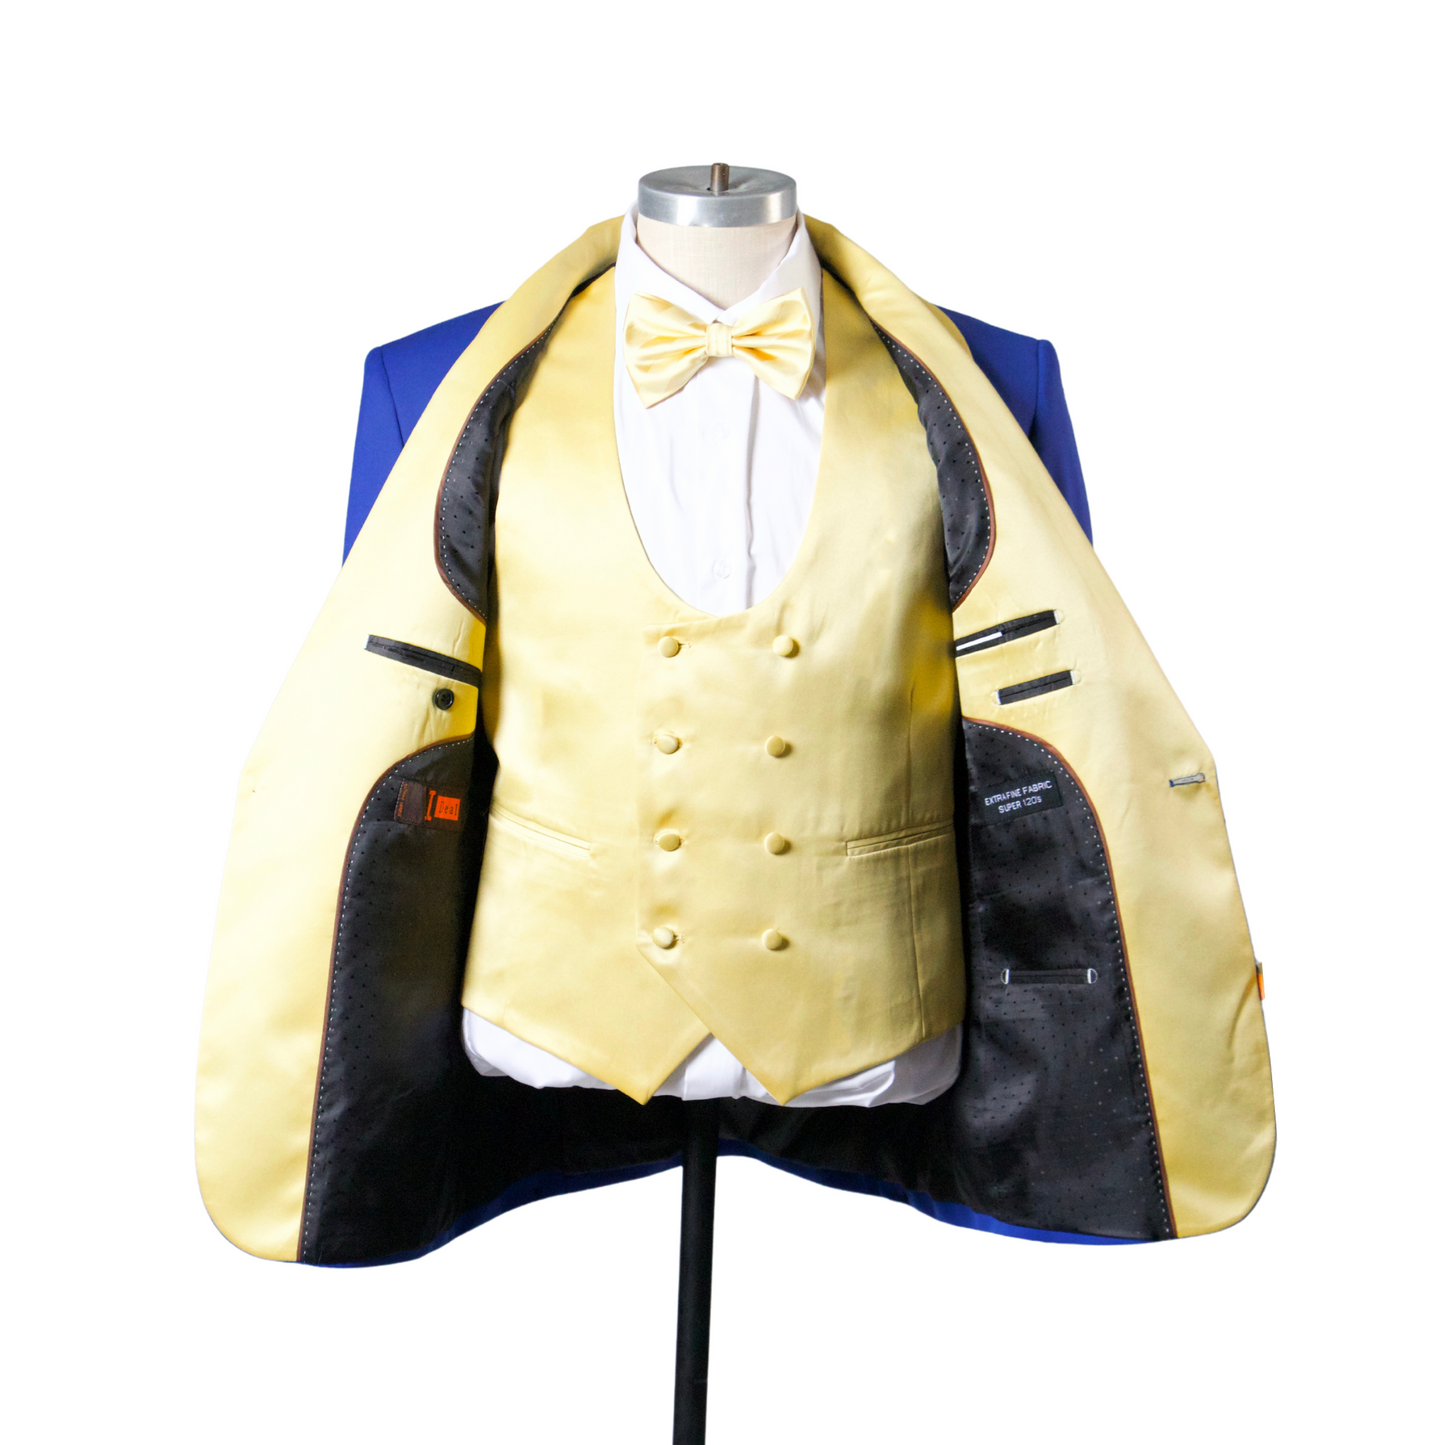 1 Button Shawl Lapel Tuxedo with Vest - Royal & Gold